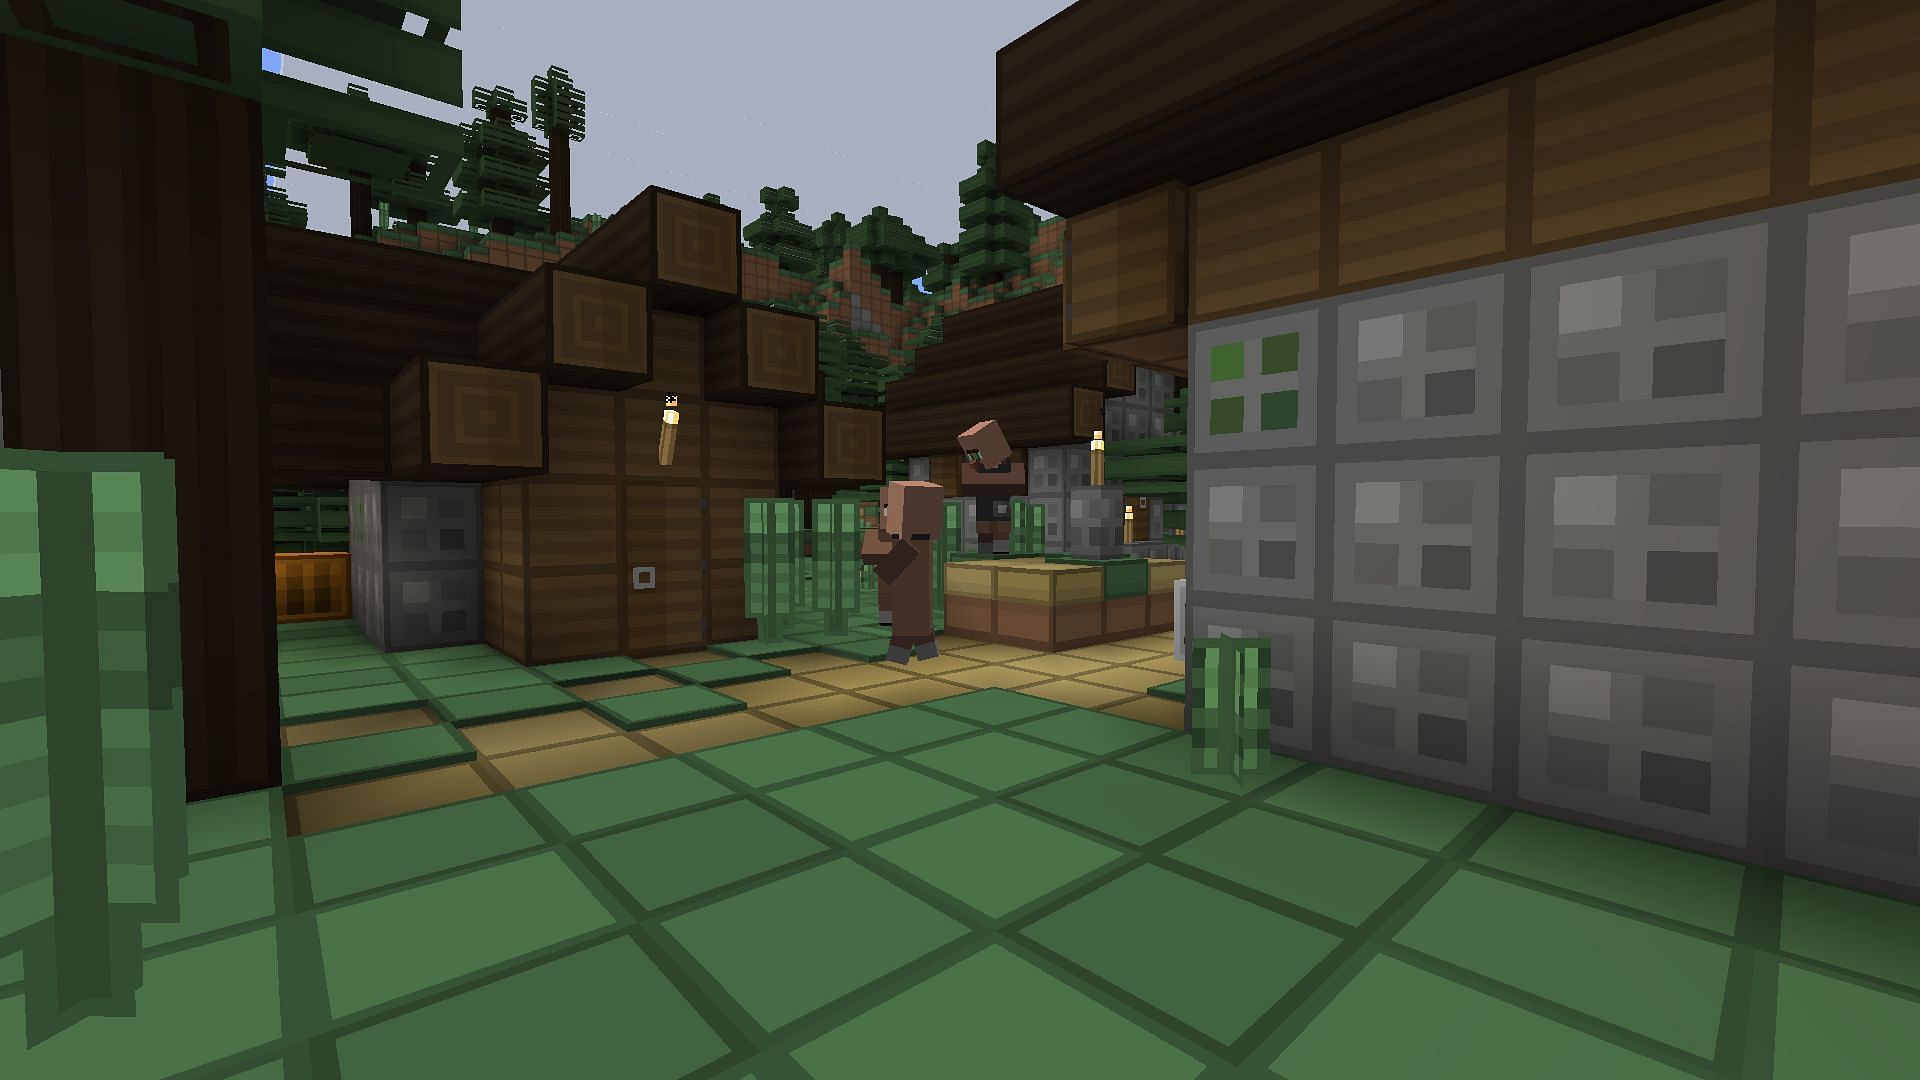 An oCd spruce village. (Image via Minecraft)